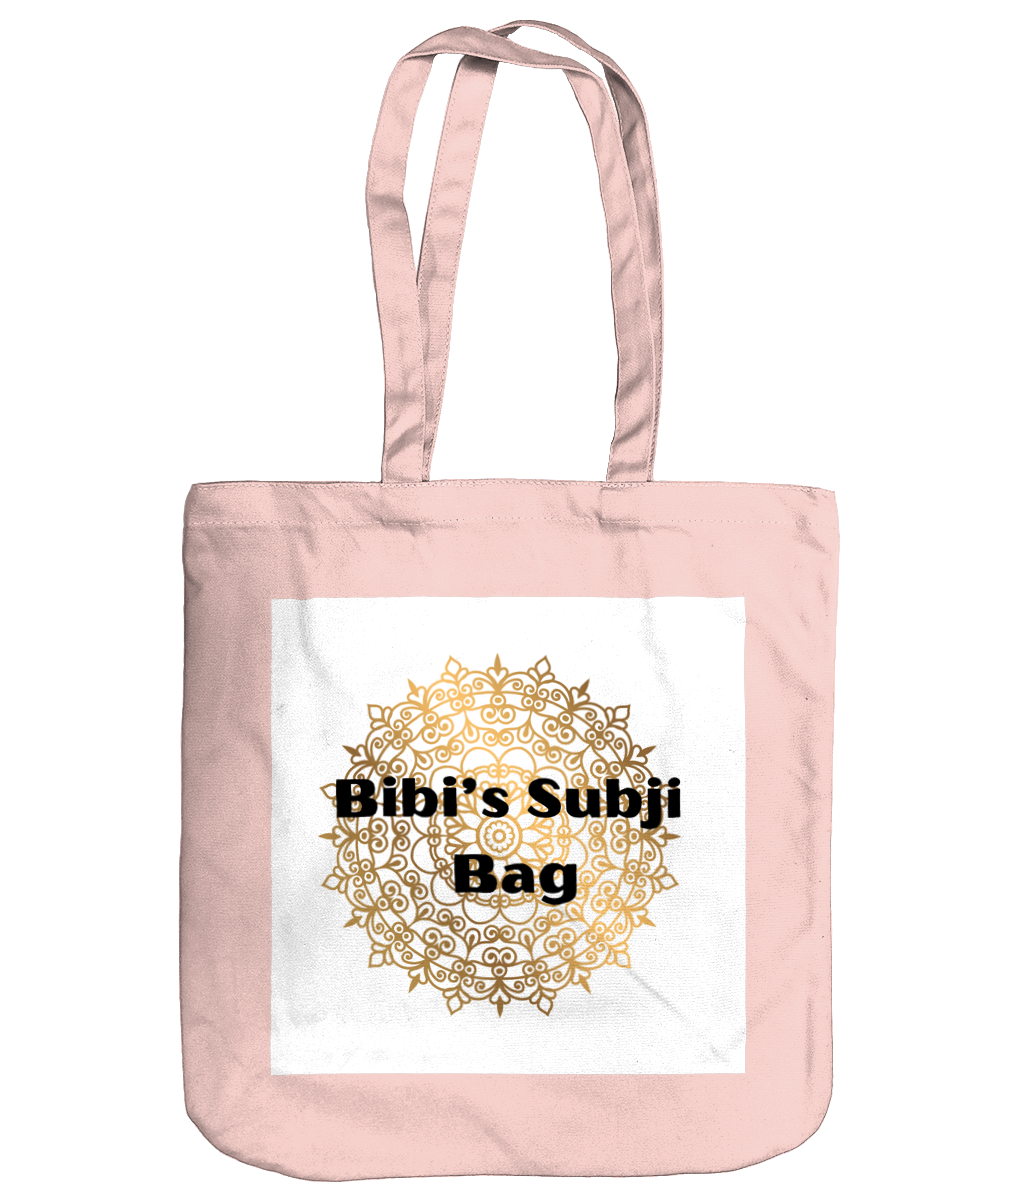 Organic Spring Tote Shopping Beach Bibi's Subji carry Bag